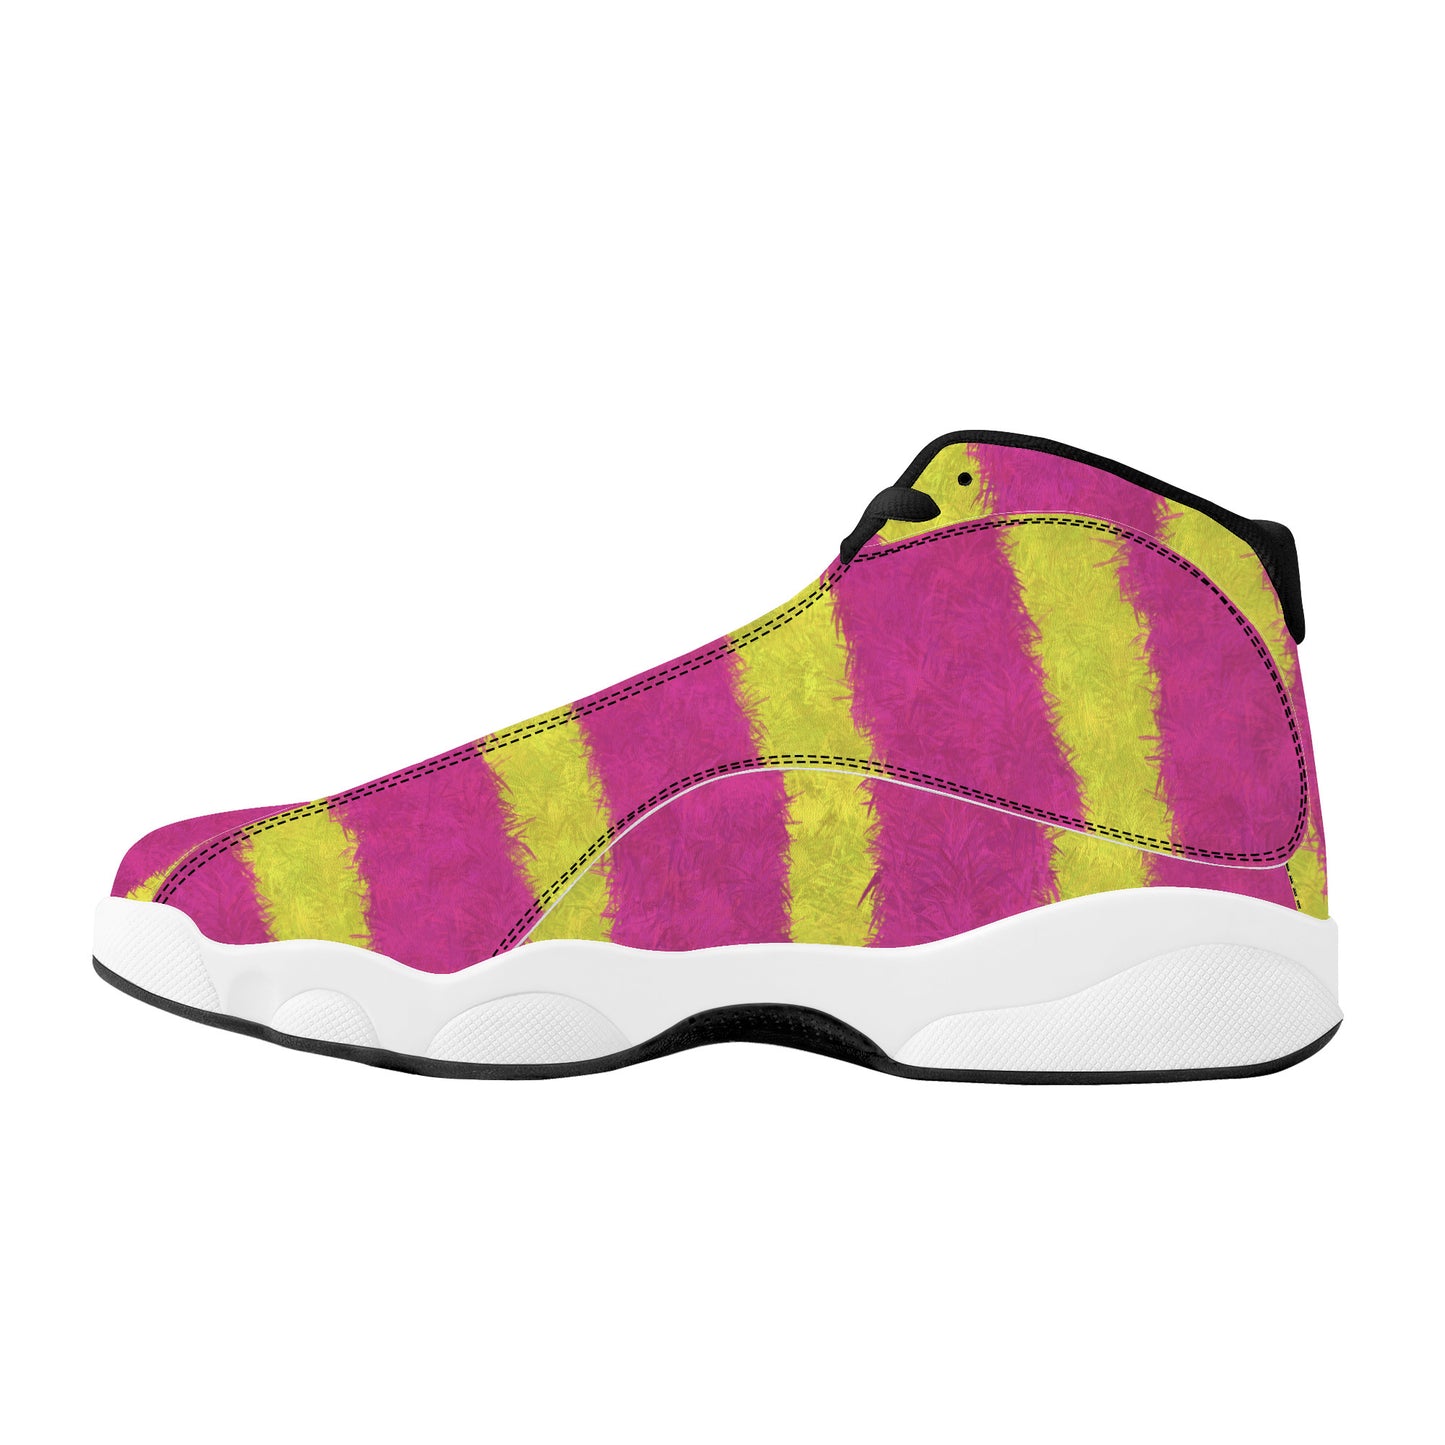 "Plume" Basketball Shoes